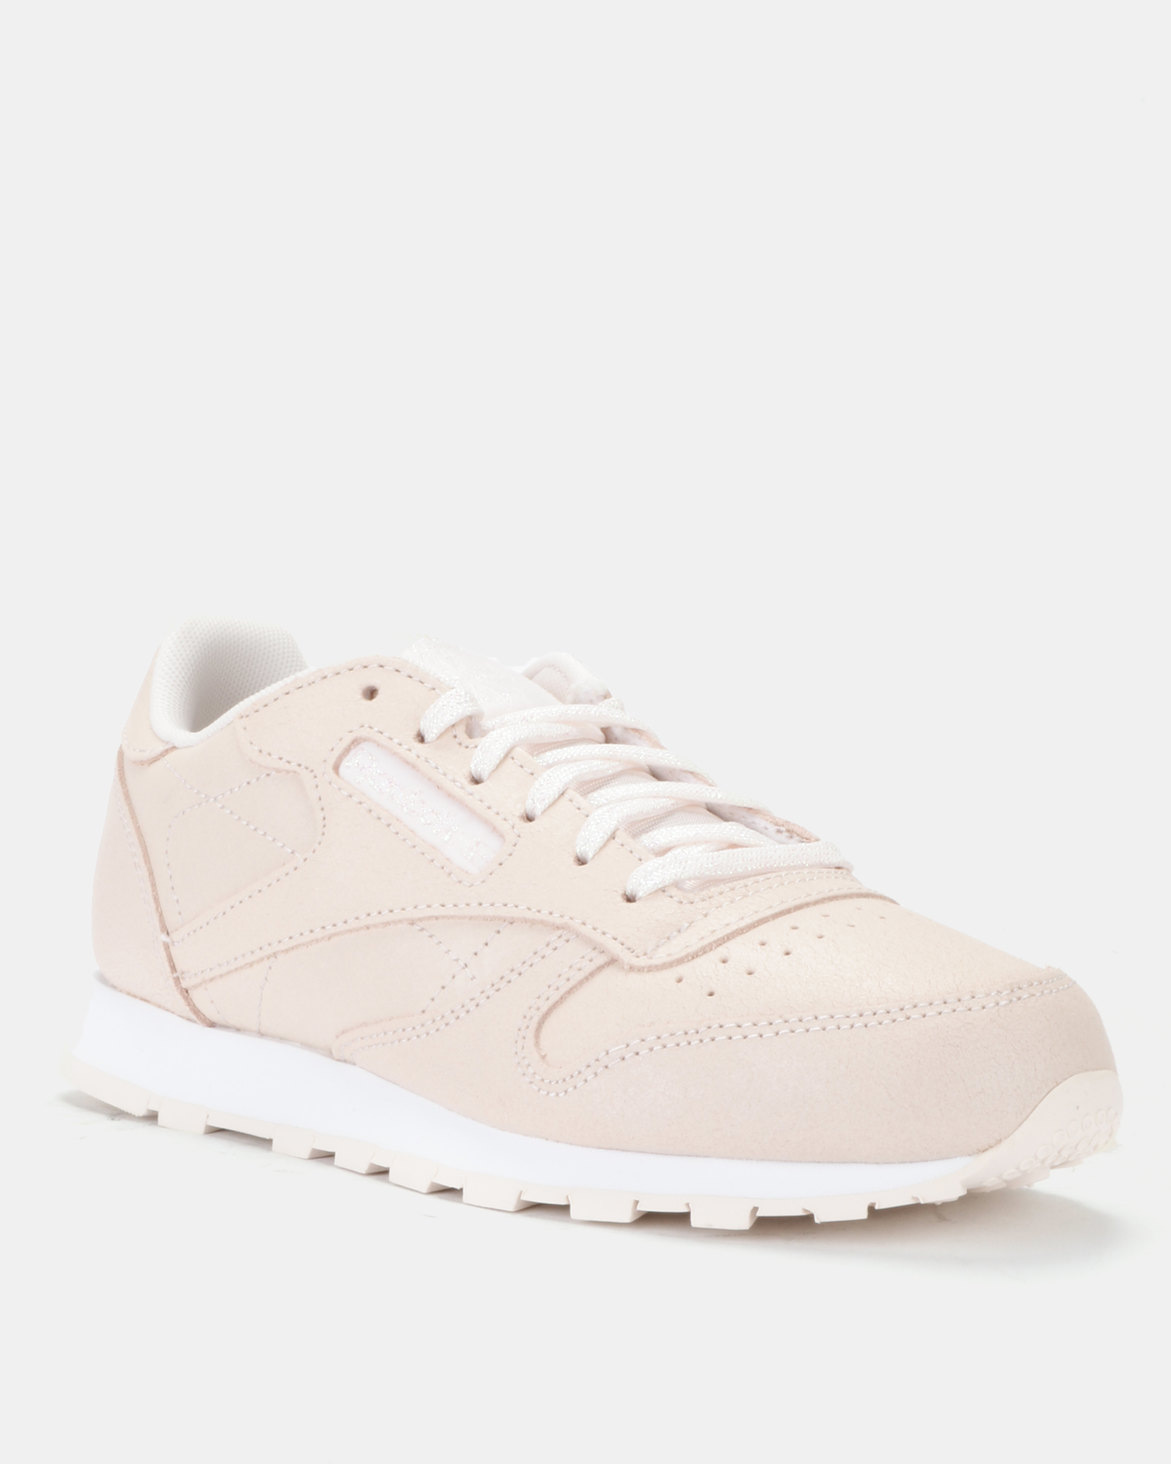 Reebok Classic Leather Sneakers Pale Pink | Zando